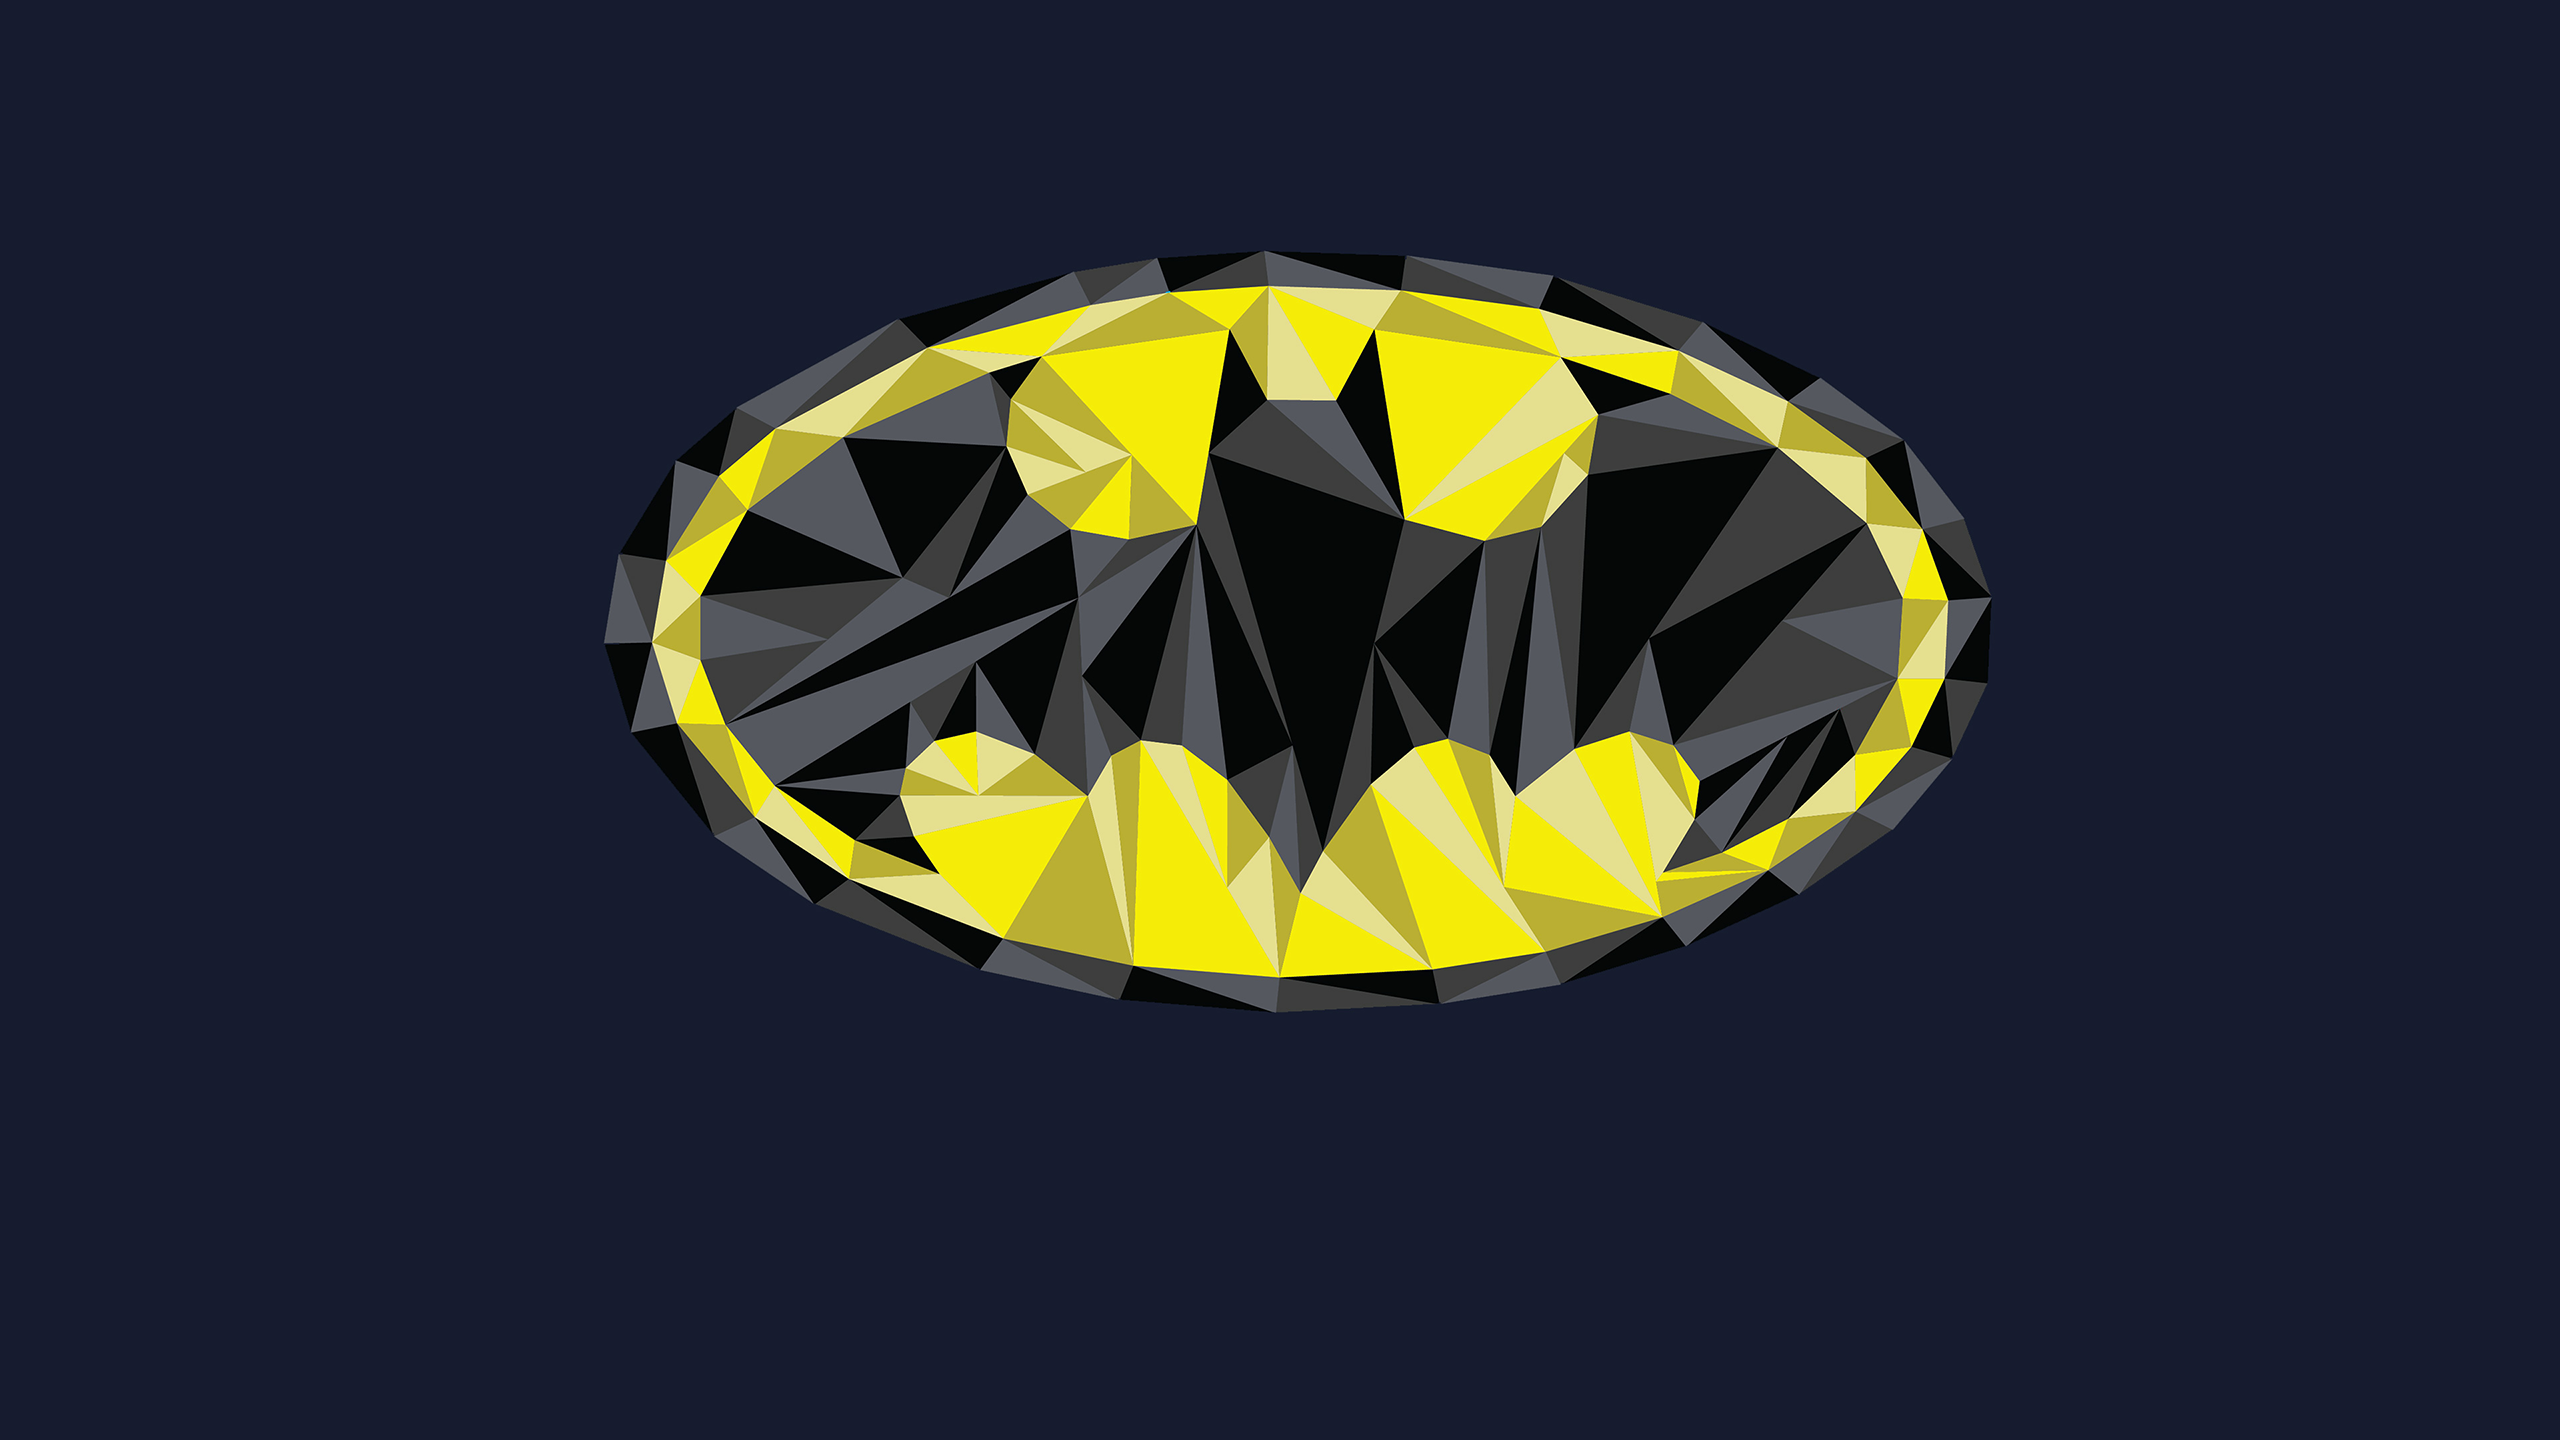 General 2560x1440 Batman Batman logo low poly minimalism DC Comics